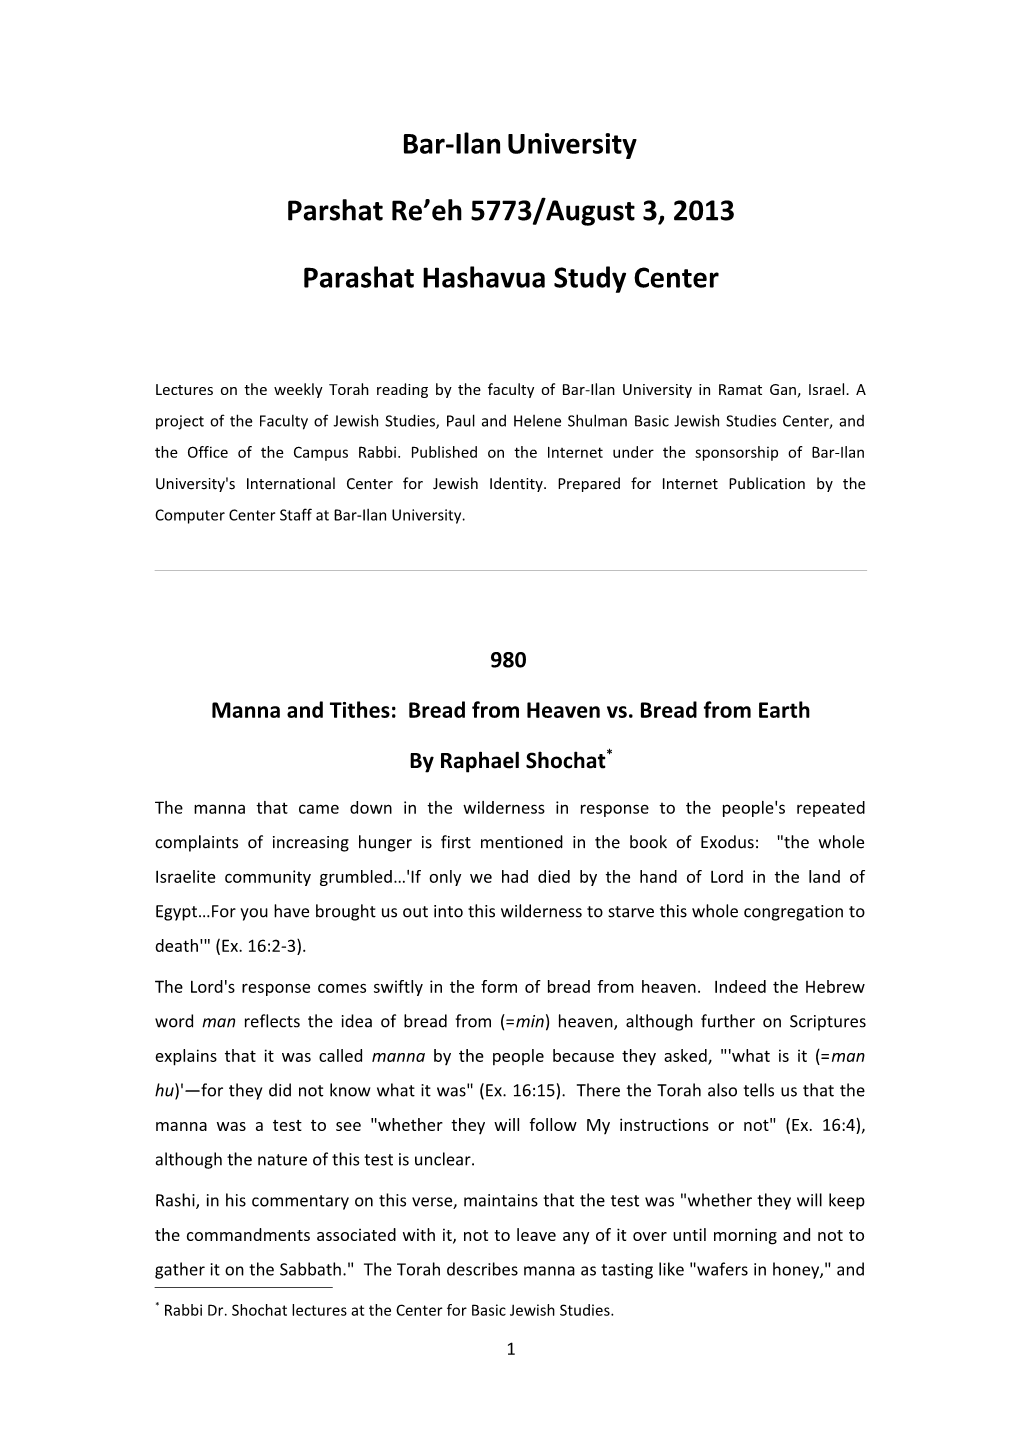 Parashat Hashavua Study Center